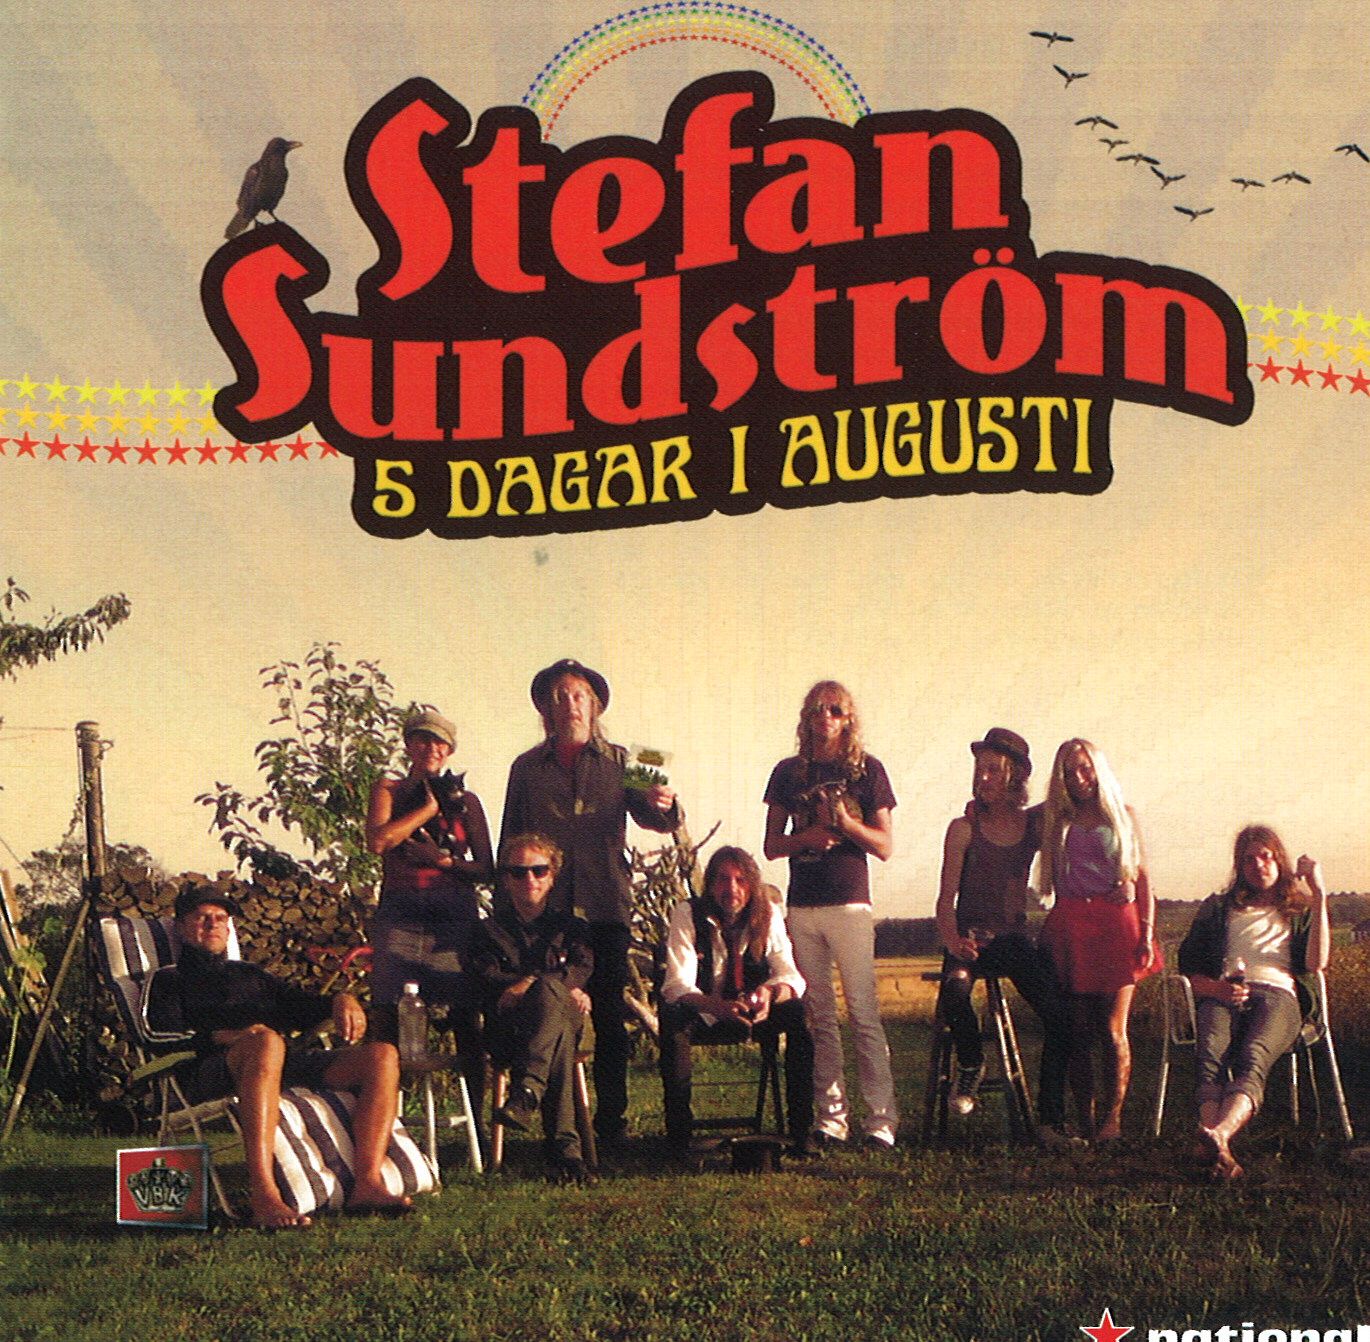 5 dagar i augusti - Stefan Sundström